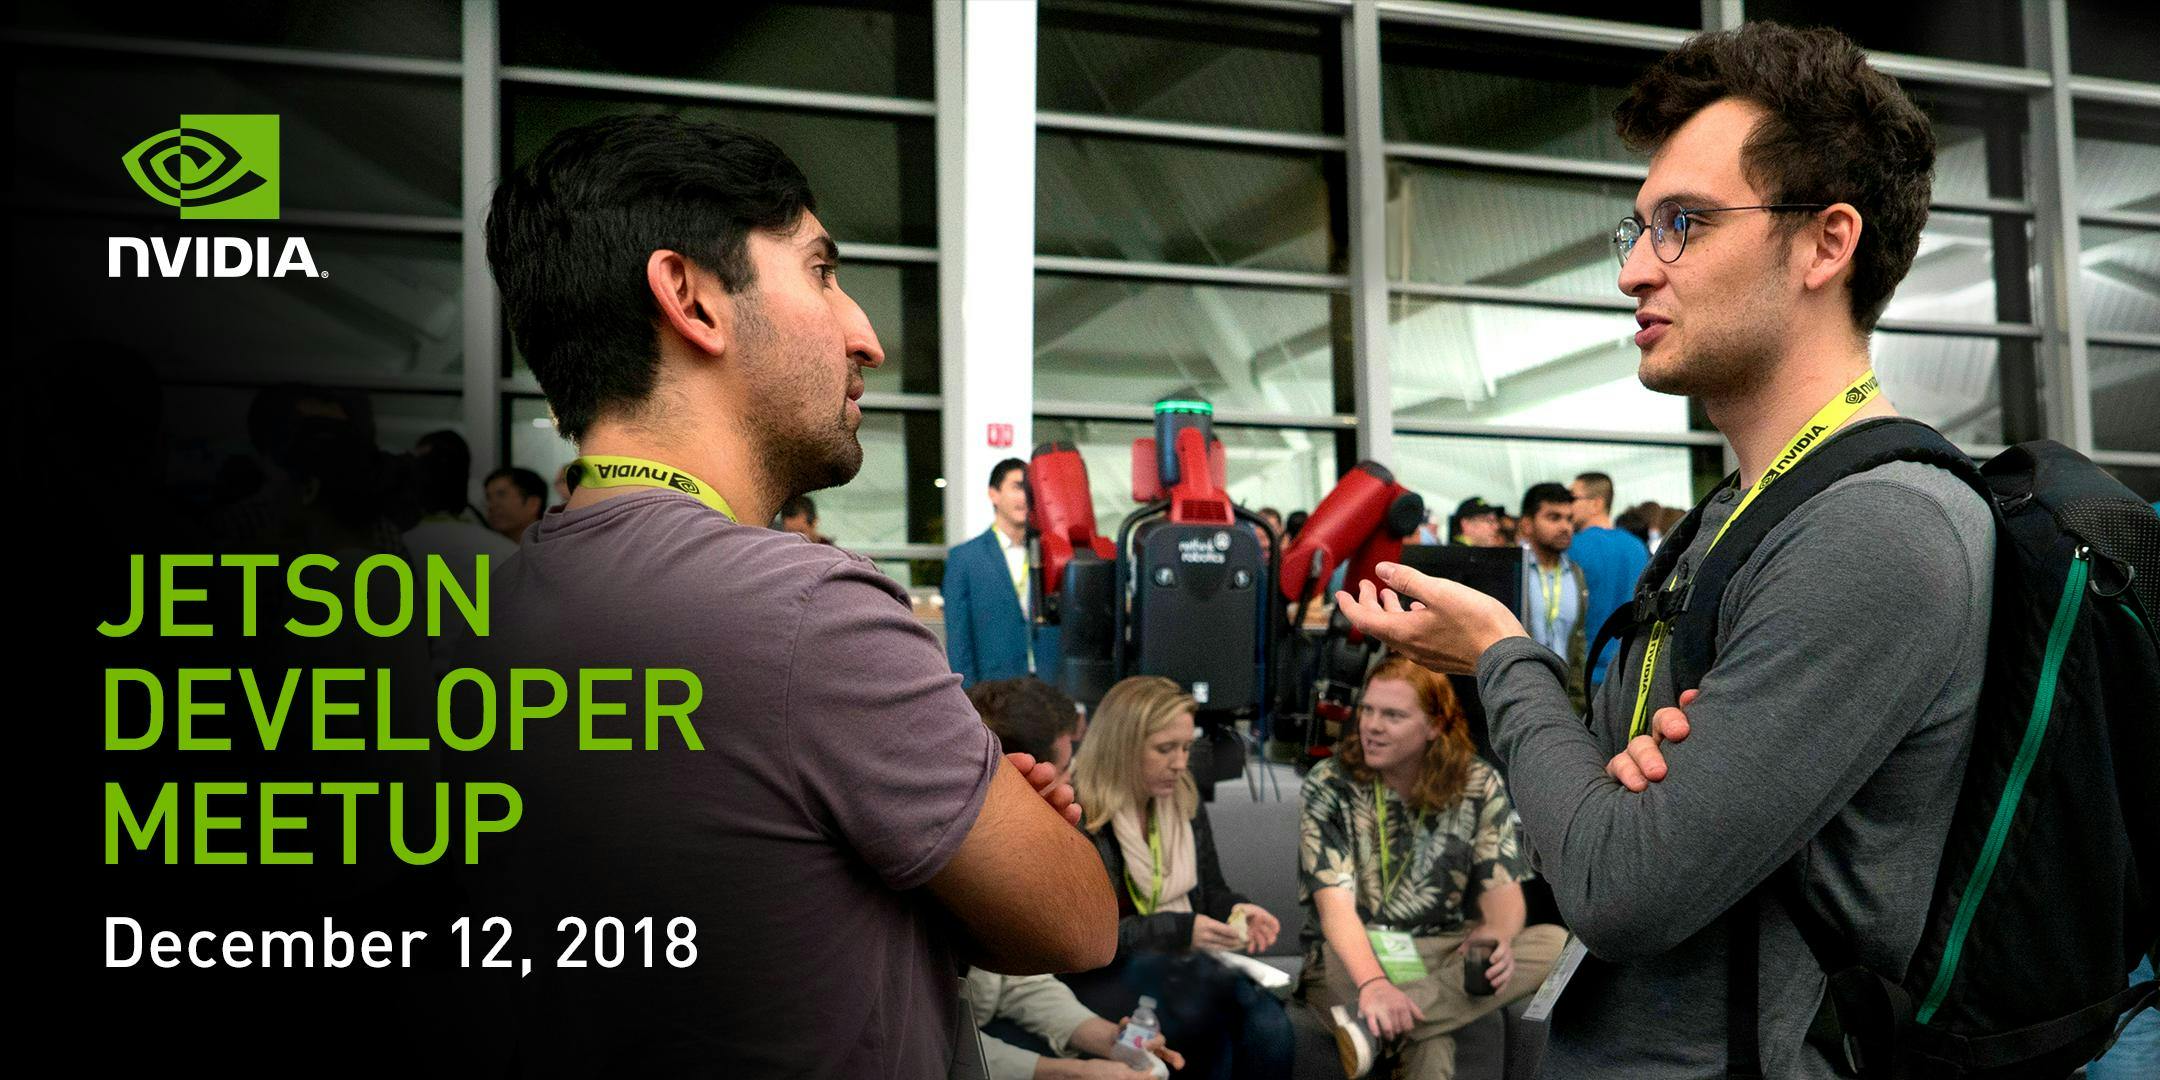 Jetson Developer Meetup at NVIDIA Endeavor